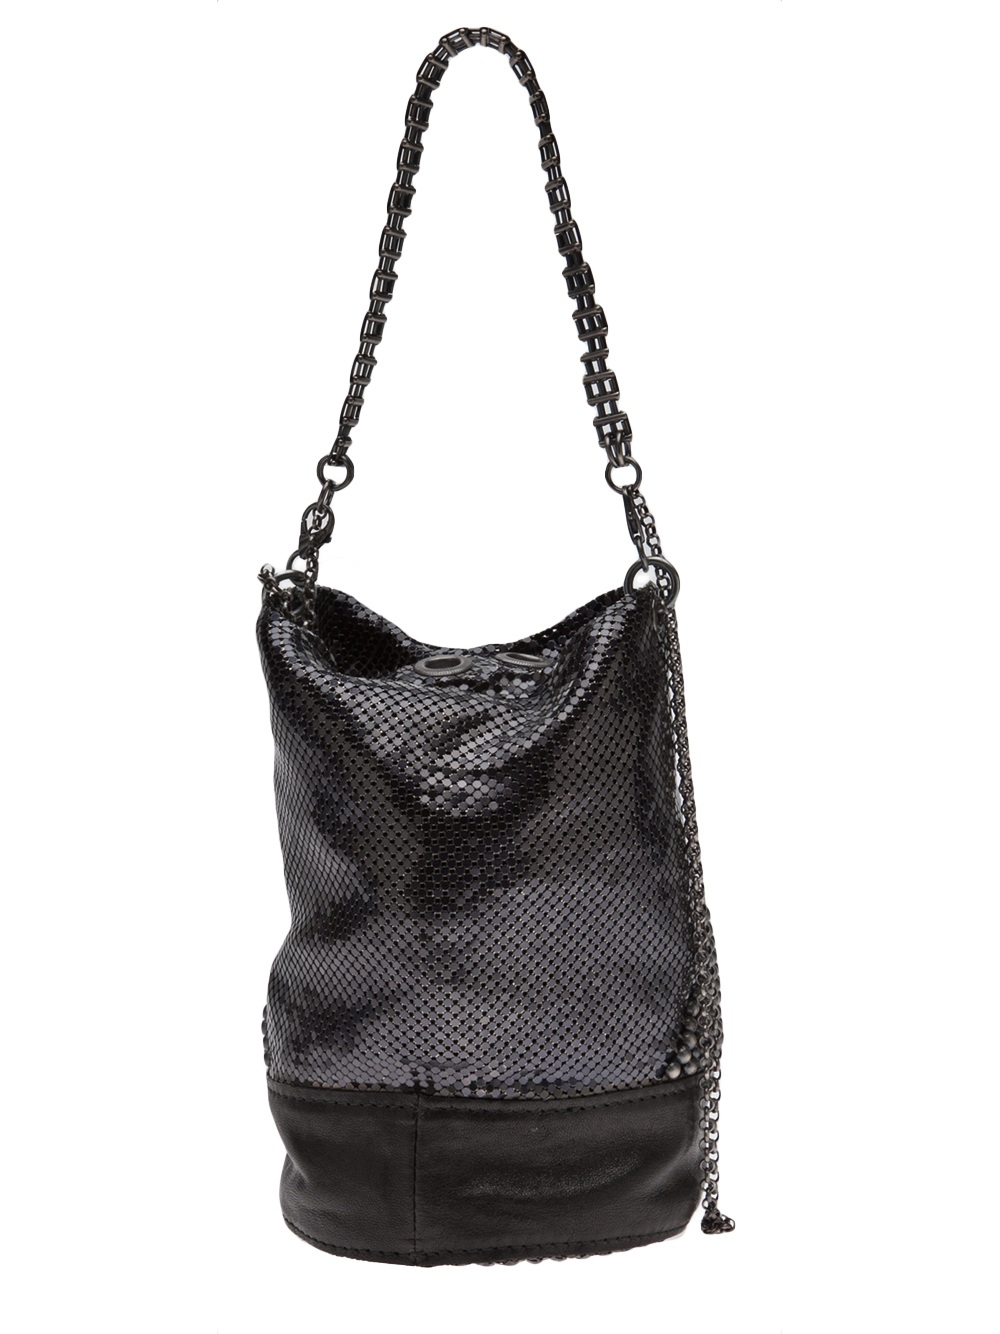 Laura b Chain Mesh Bag in Black | Lyst